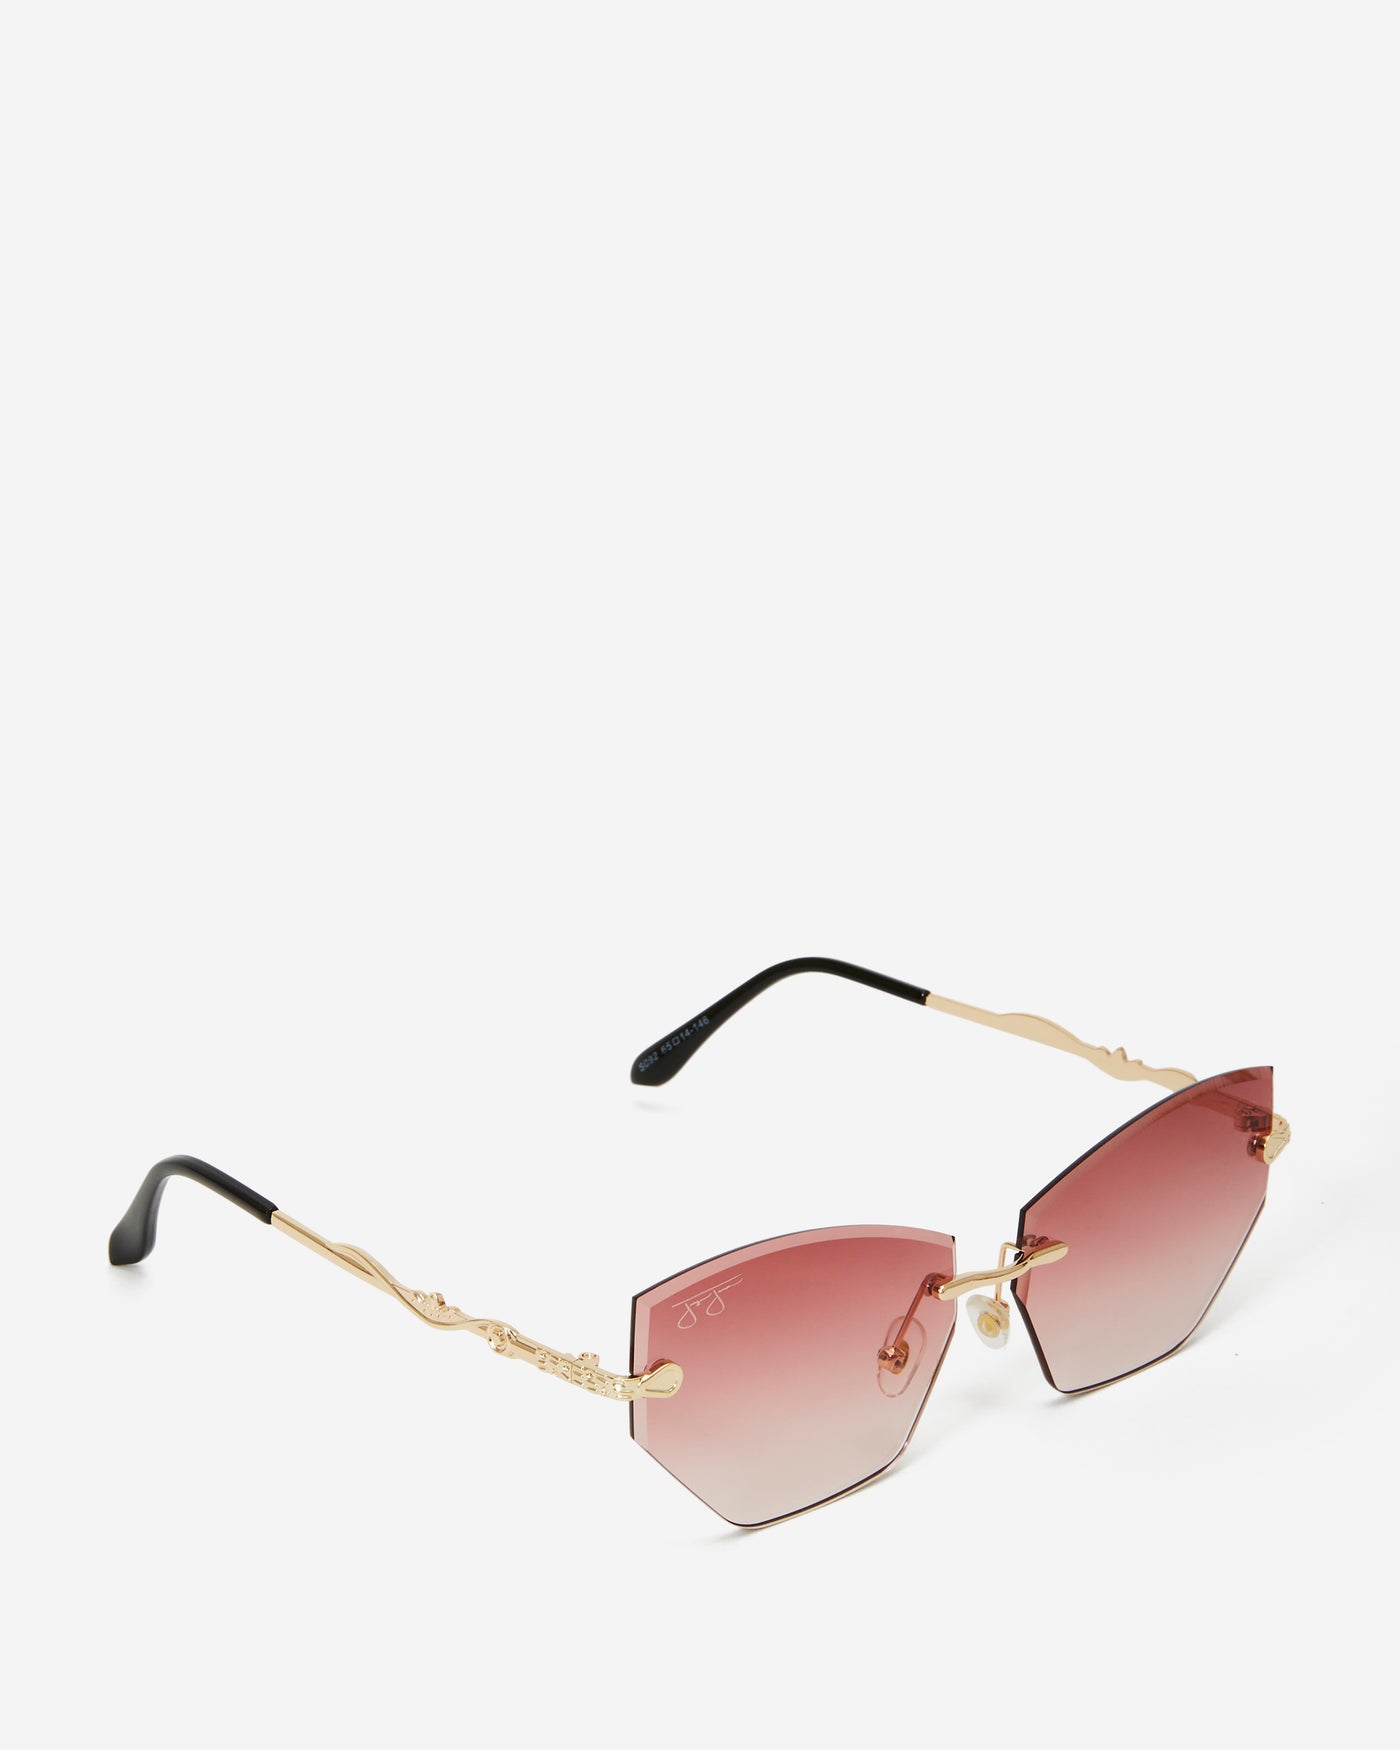 Geometric Metal Frameless Sunglasses - Rose Colored Lens Sunglasses Joey James, The Label   